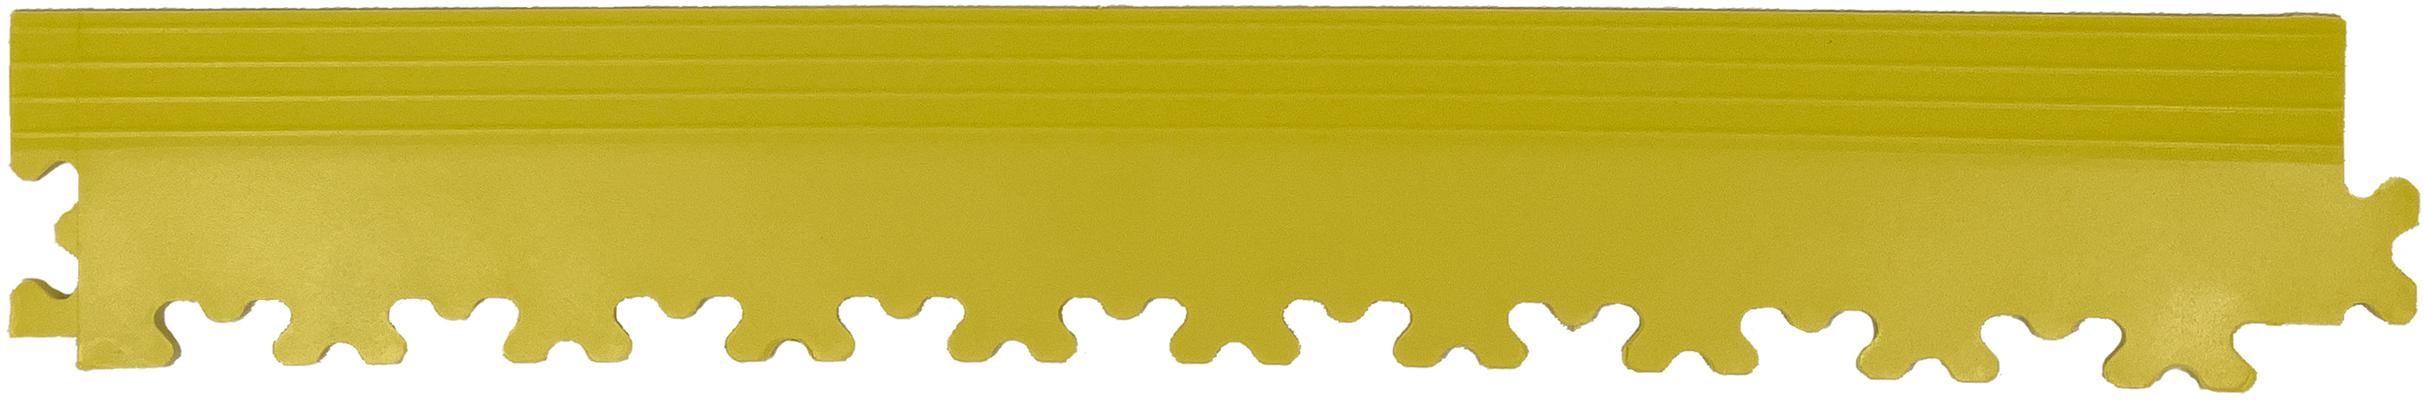 R-Tile Dovetail 5Mm Edge Tiles - Yellow